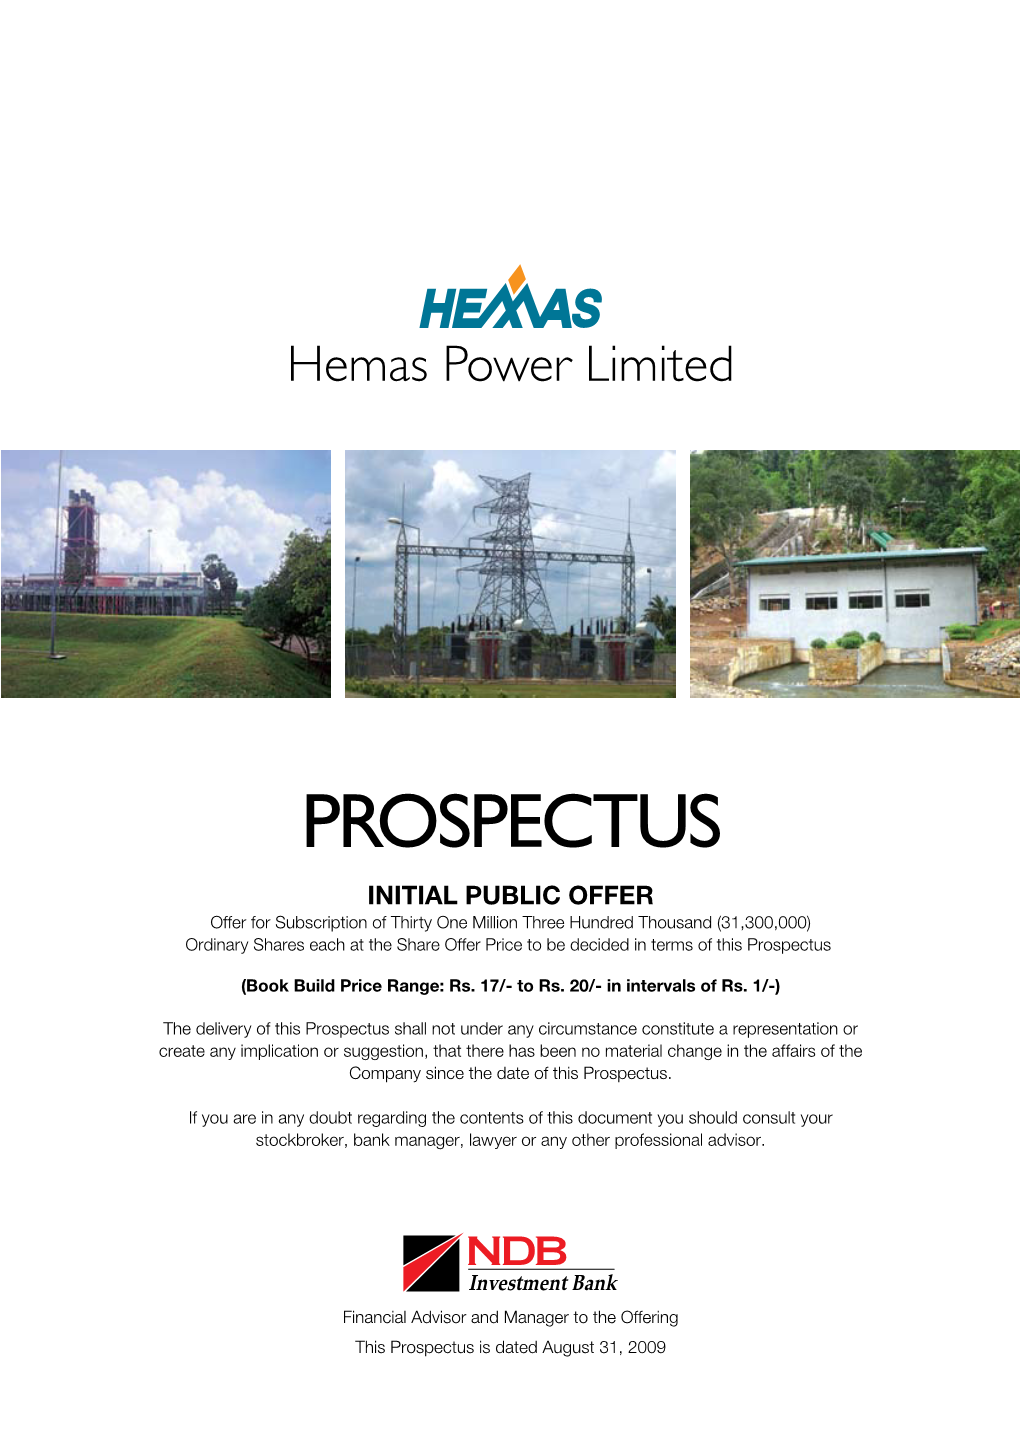 7.0 Business Operations of Hemas Power Group